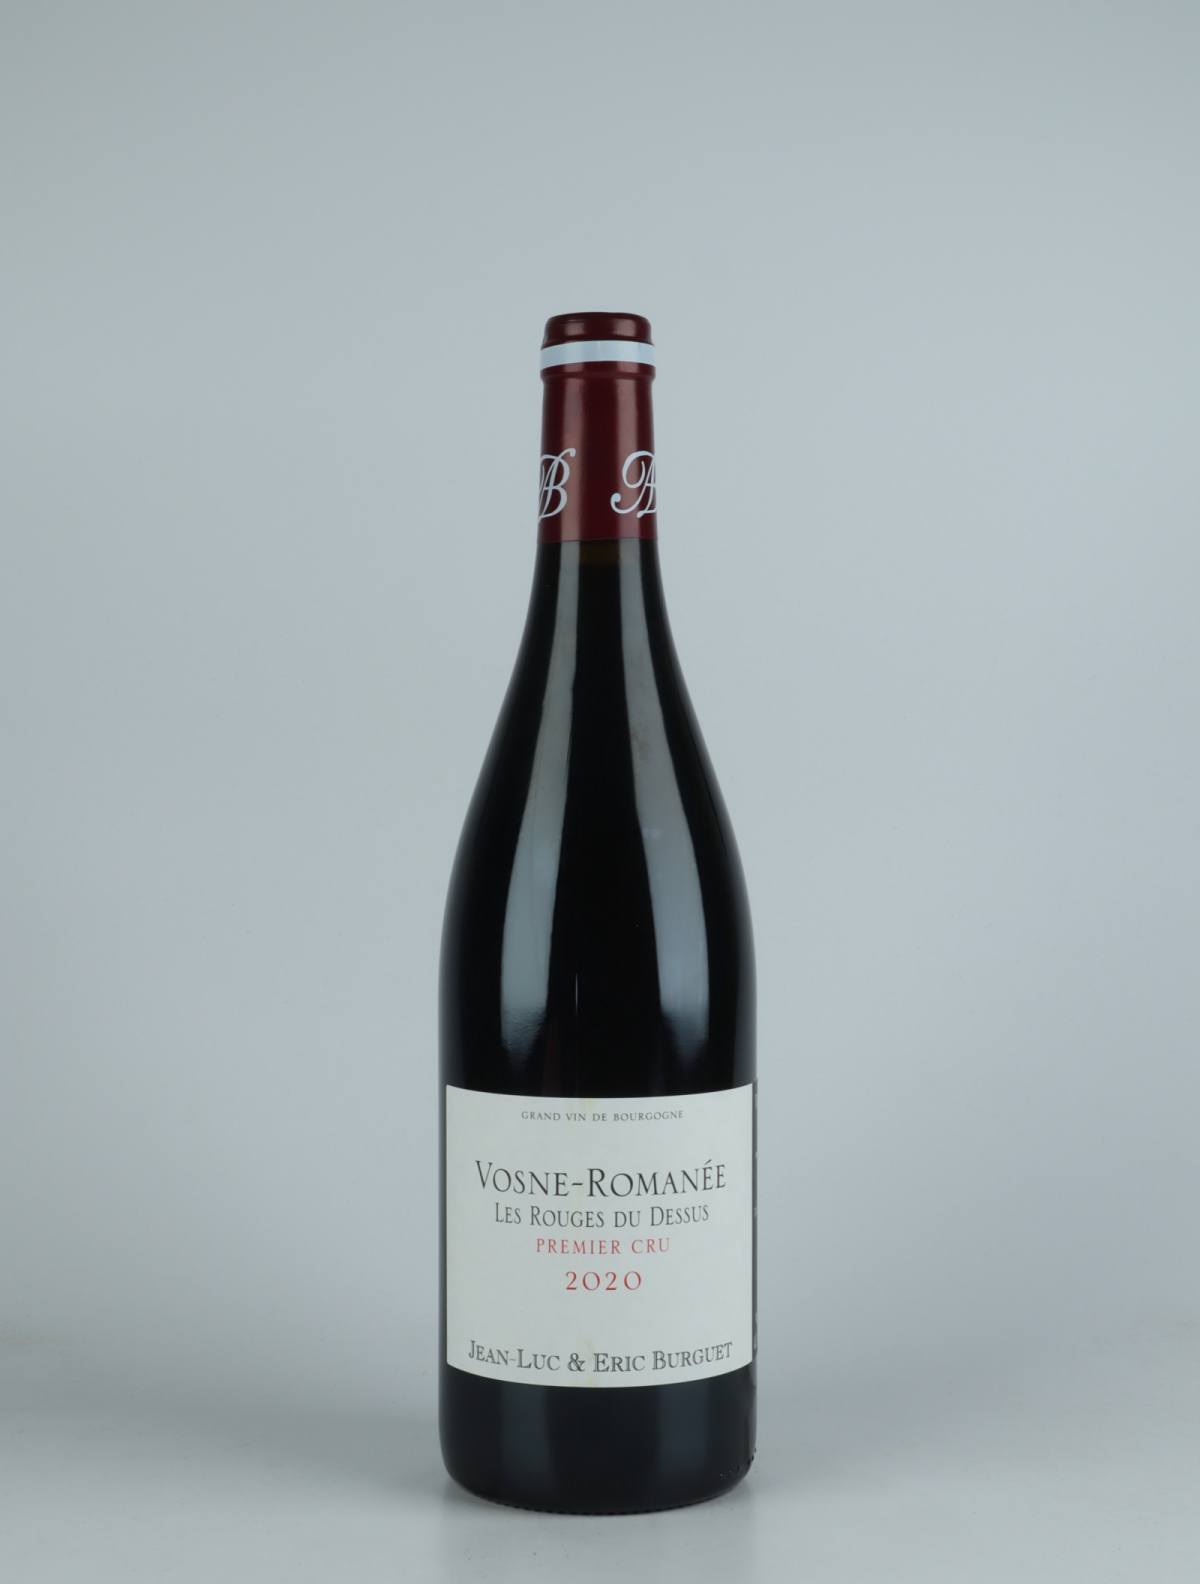 A bottle 2020 Vosne-Romanée 1. Cru - Les Rouges du Dessus Red wine from Jean-Luc & Eric Burguet, Burgundy in France